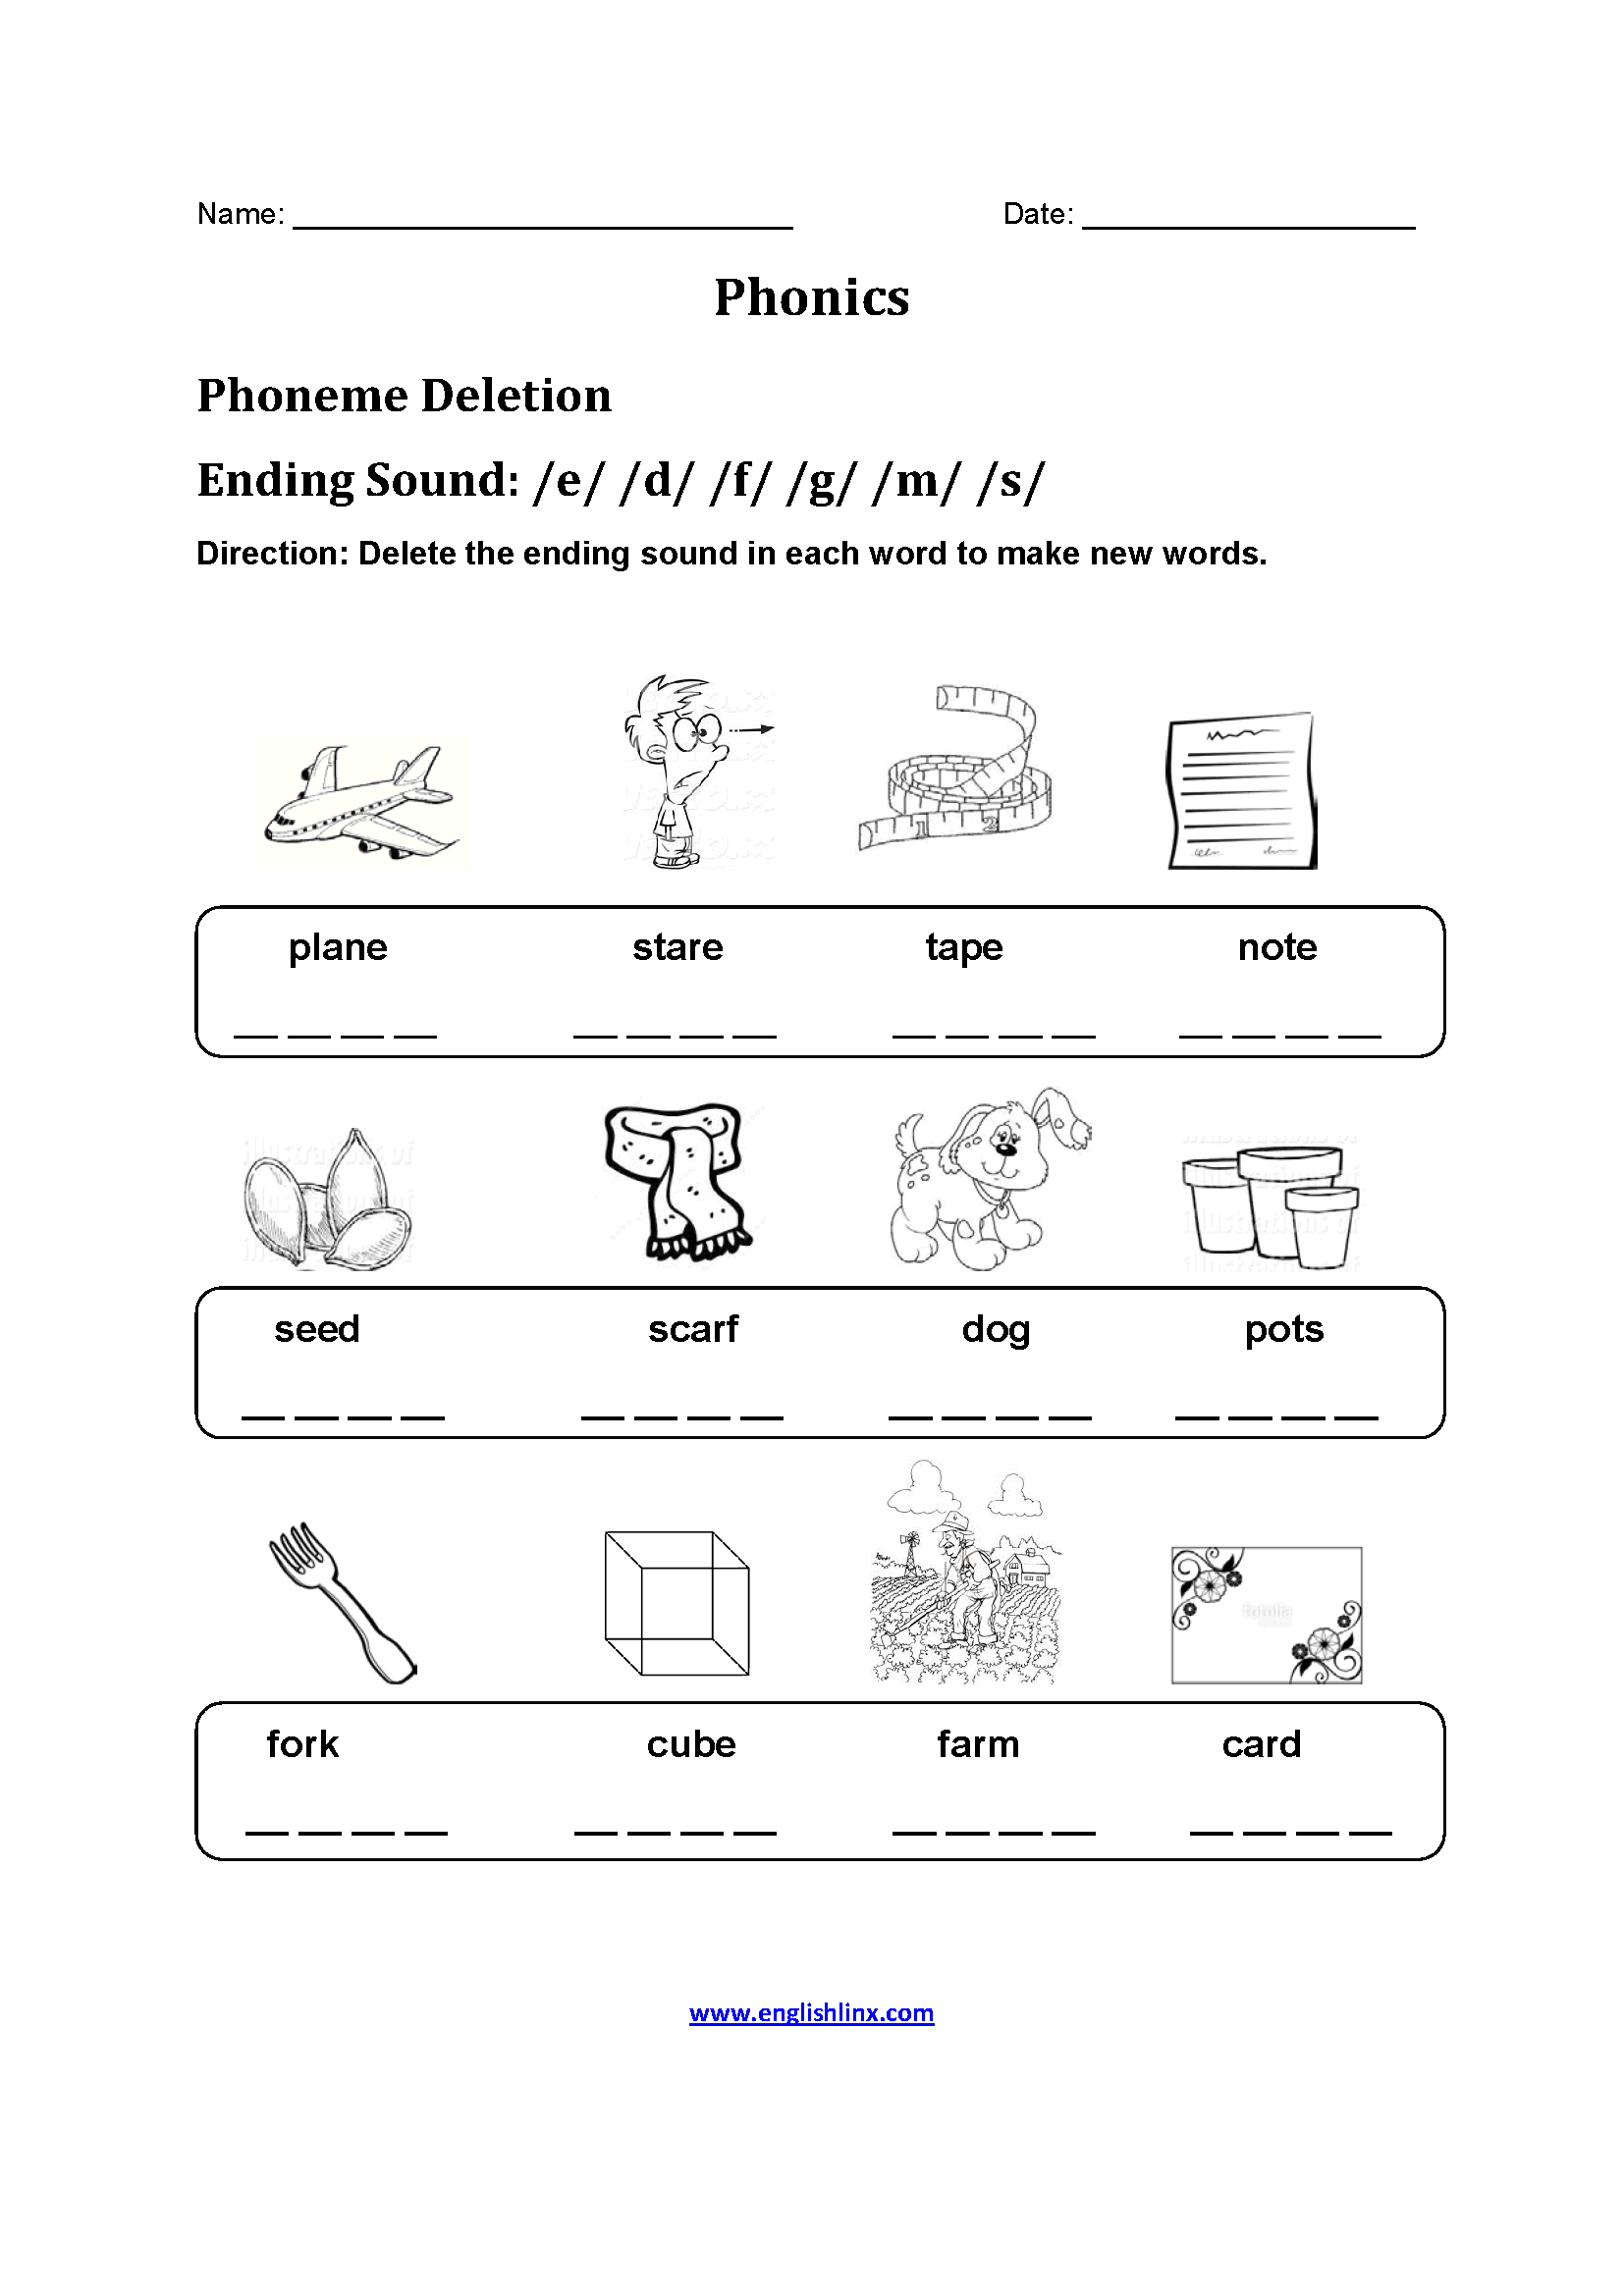 Phoneme Deletion Phonics Worksheets